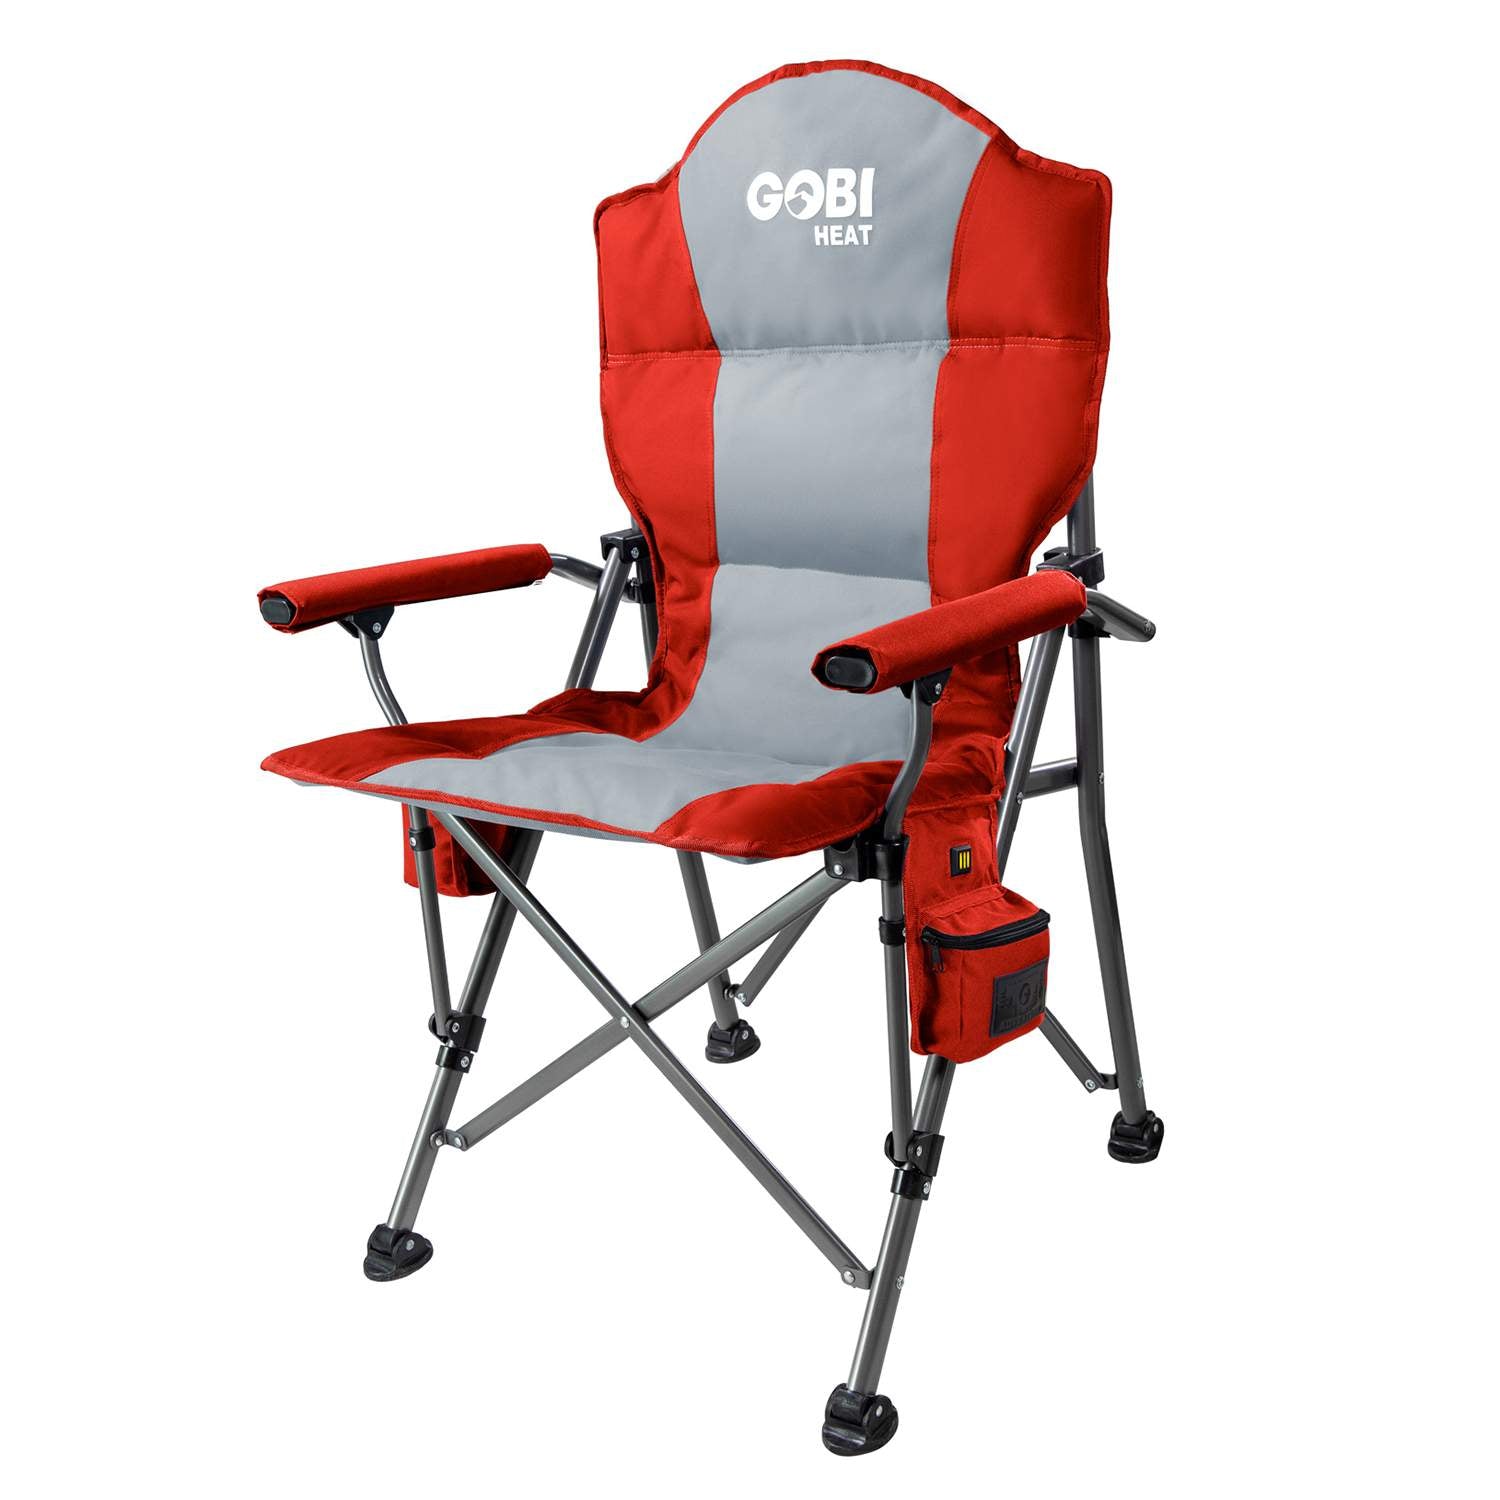 Flare Terrain Heated Camping Chair